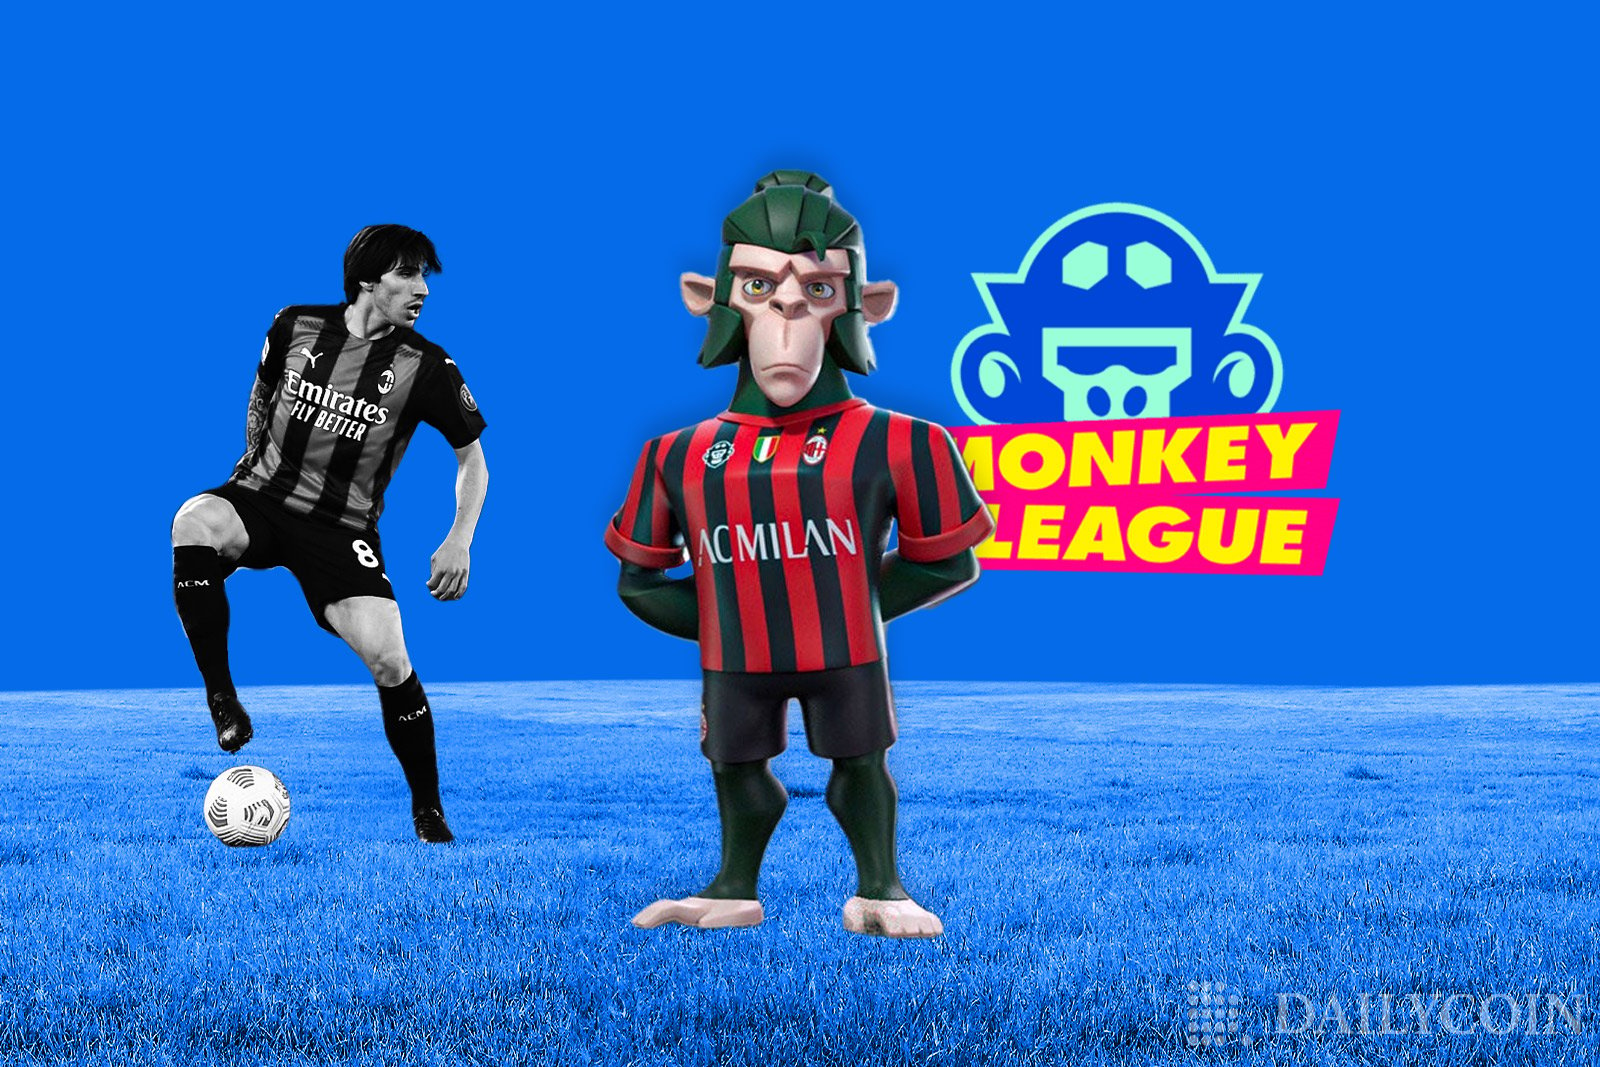 AC Milan Kicks Off NFT Football Game With Monkey League